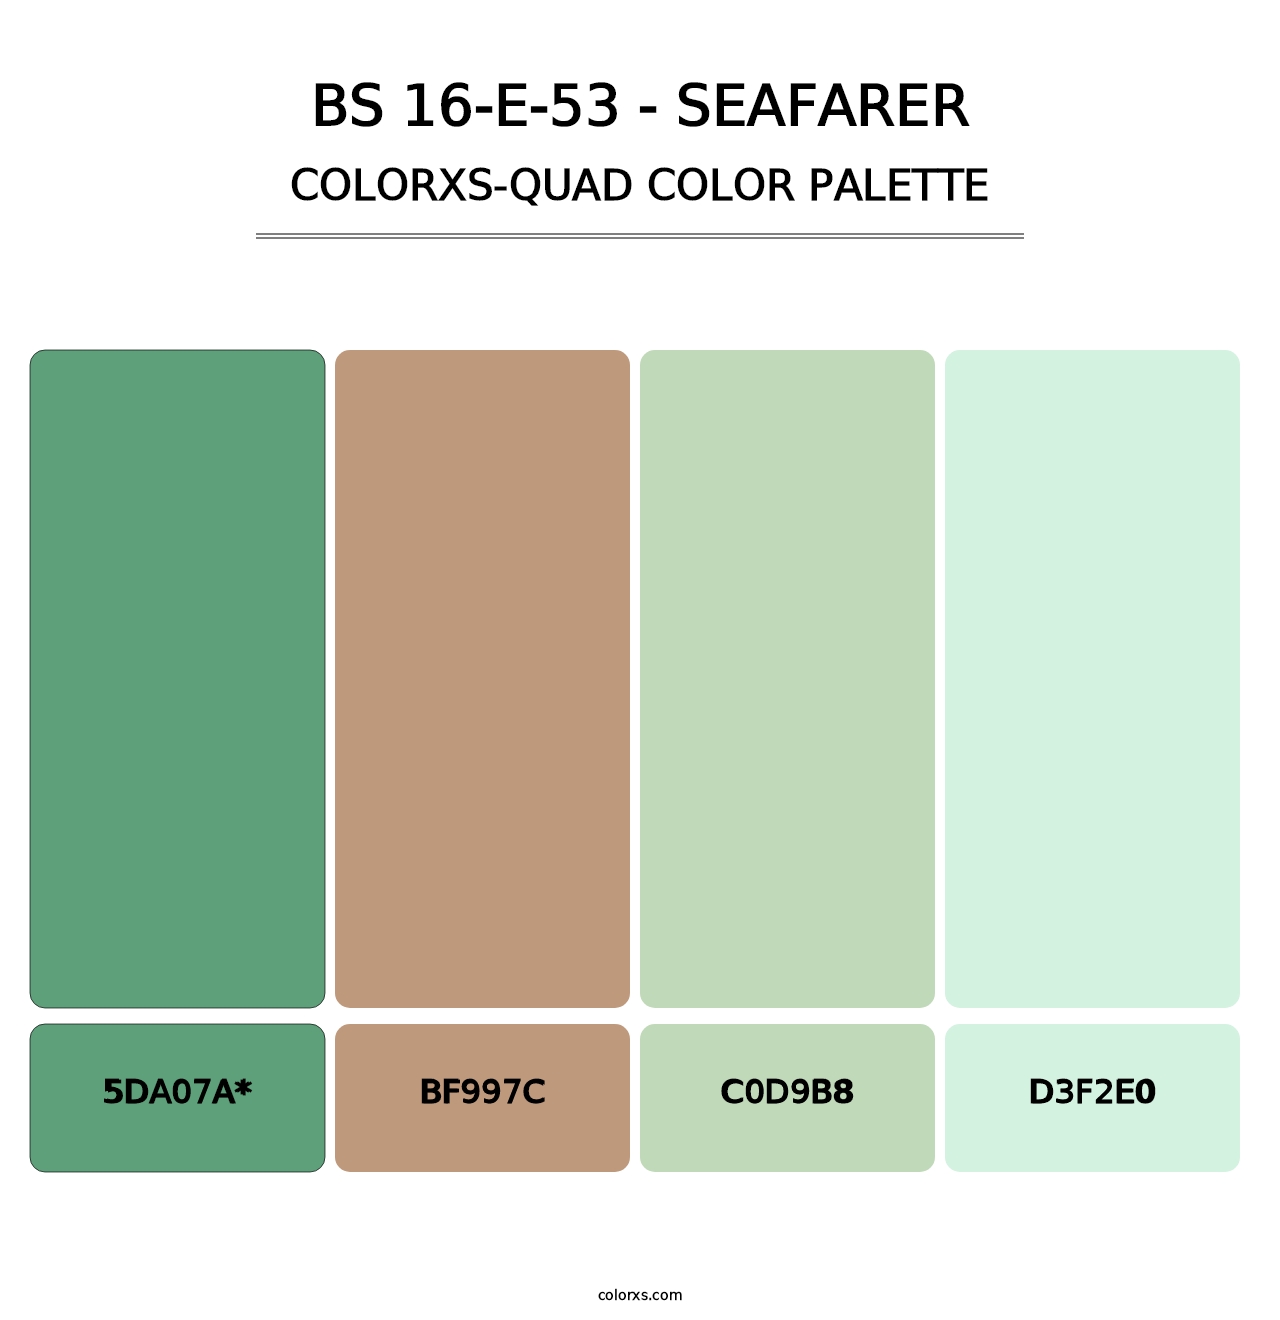 BS 16-E-53 - Seafarer - Colorxs Quad Palette